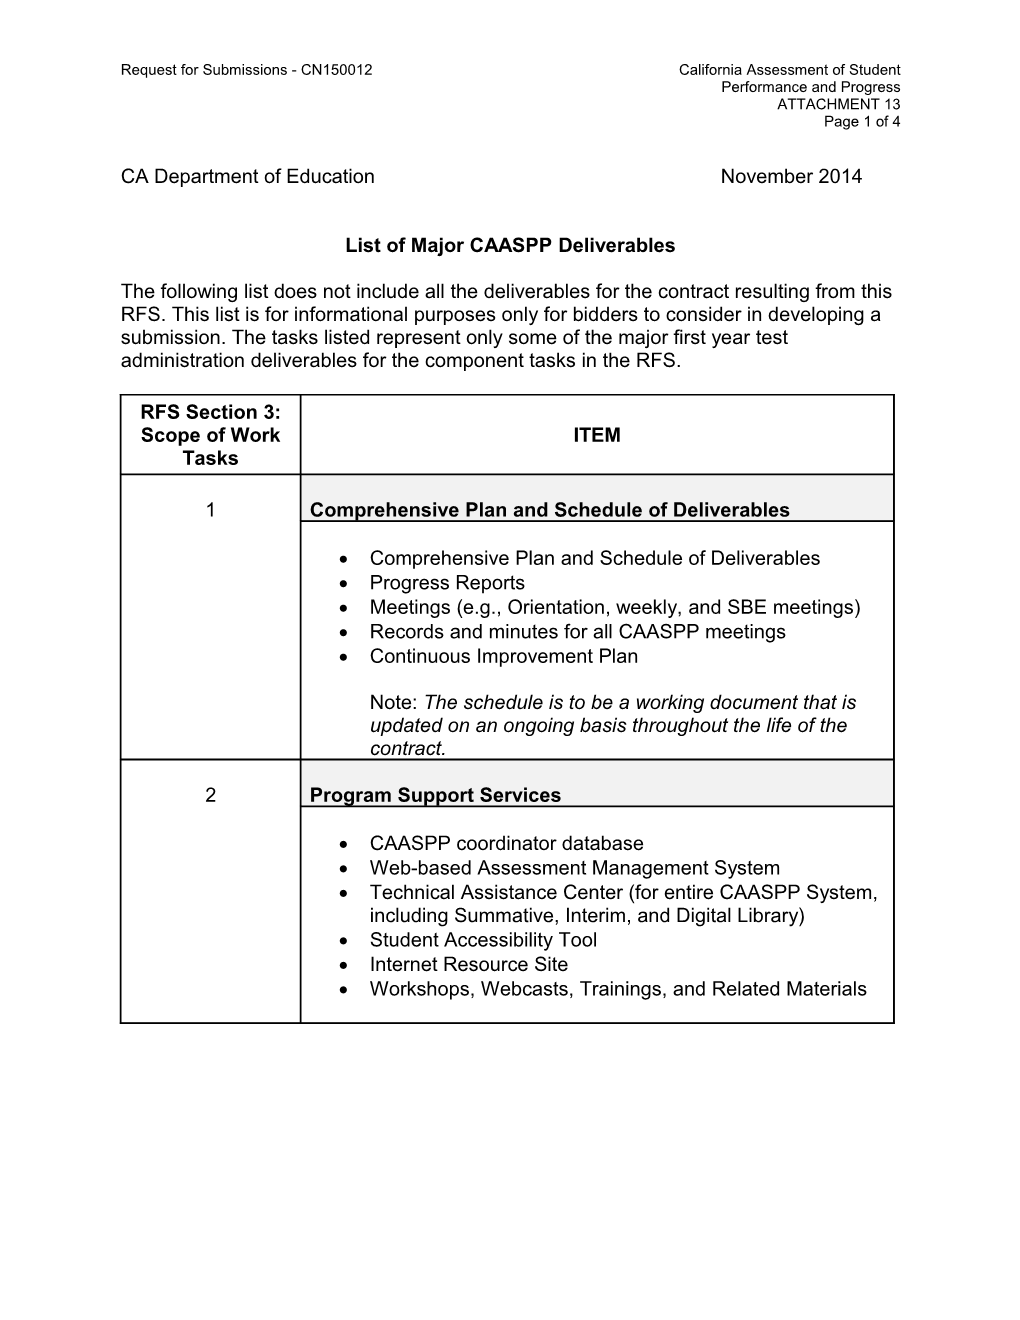 2014 CAASPP RFS, Attachment 13 - CAASPP (CA Dept of Education)